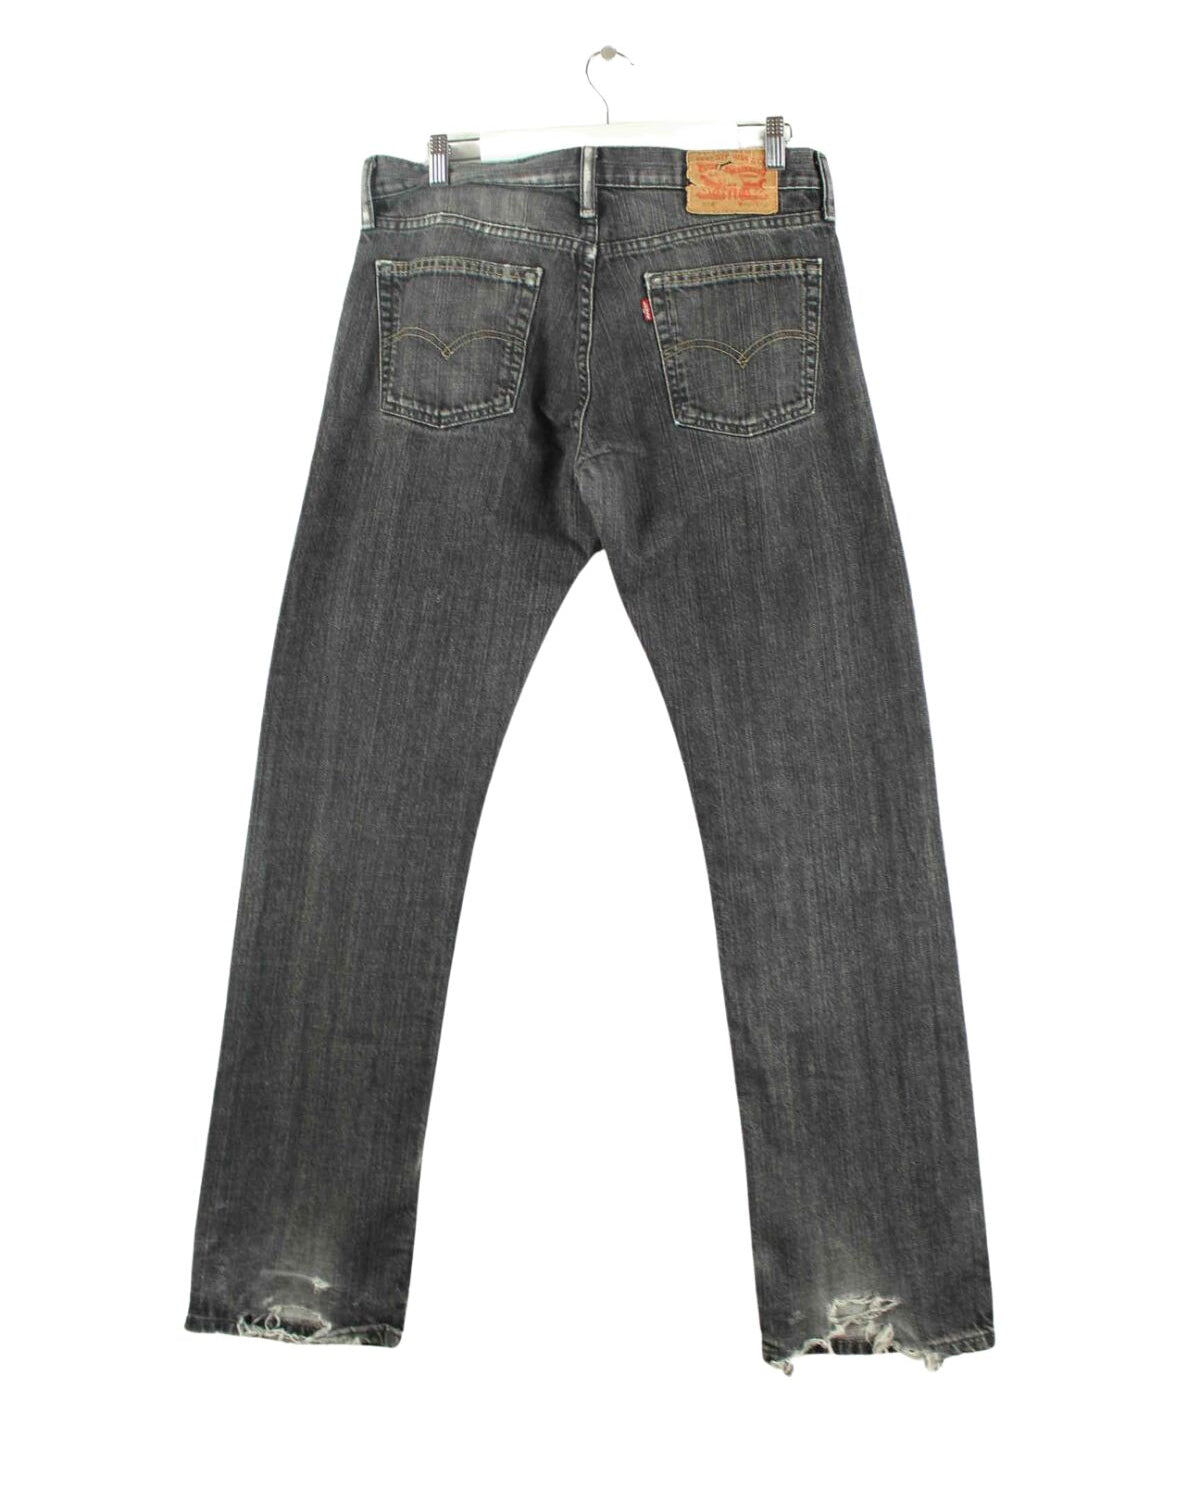 Levi's 514 Jeans Grau W32 L34 (back image)